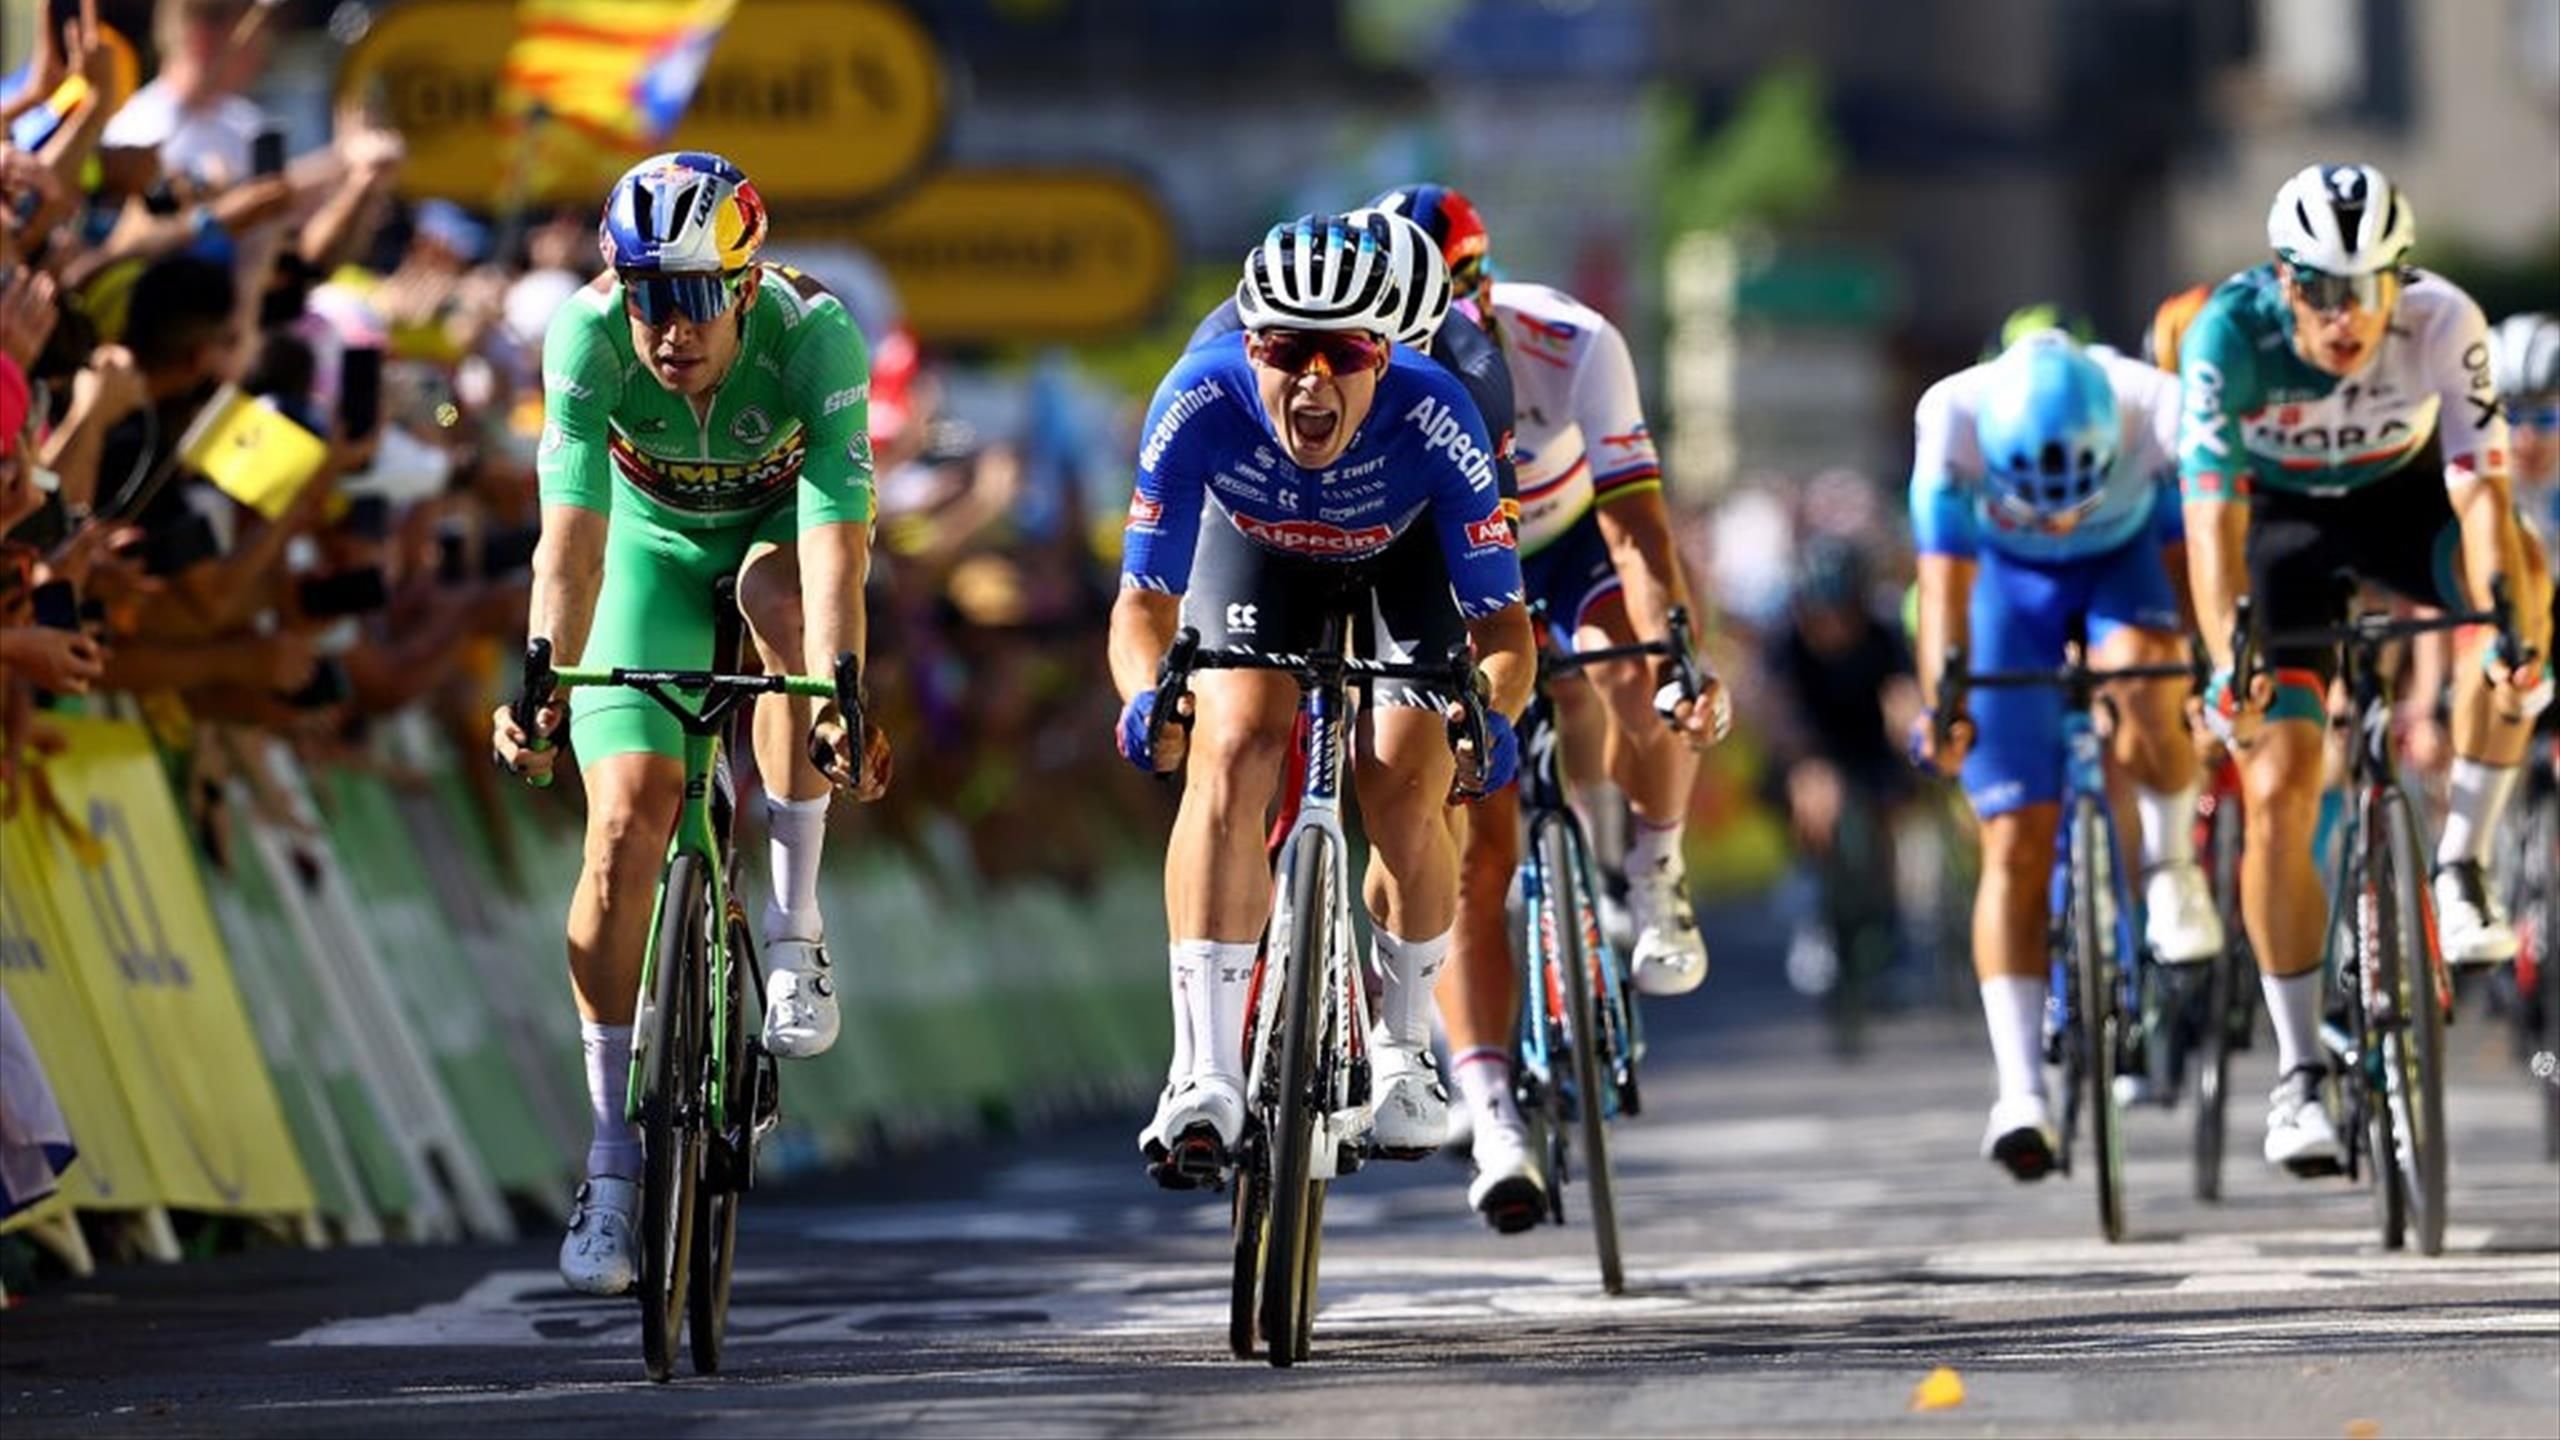 Ataque de nervios equipaje celebrar Tour de France: Jasper Philipsen pips Wout van Aert to Stage 15 win in  thrilling sprint finish on day of drama - Eurosport